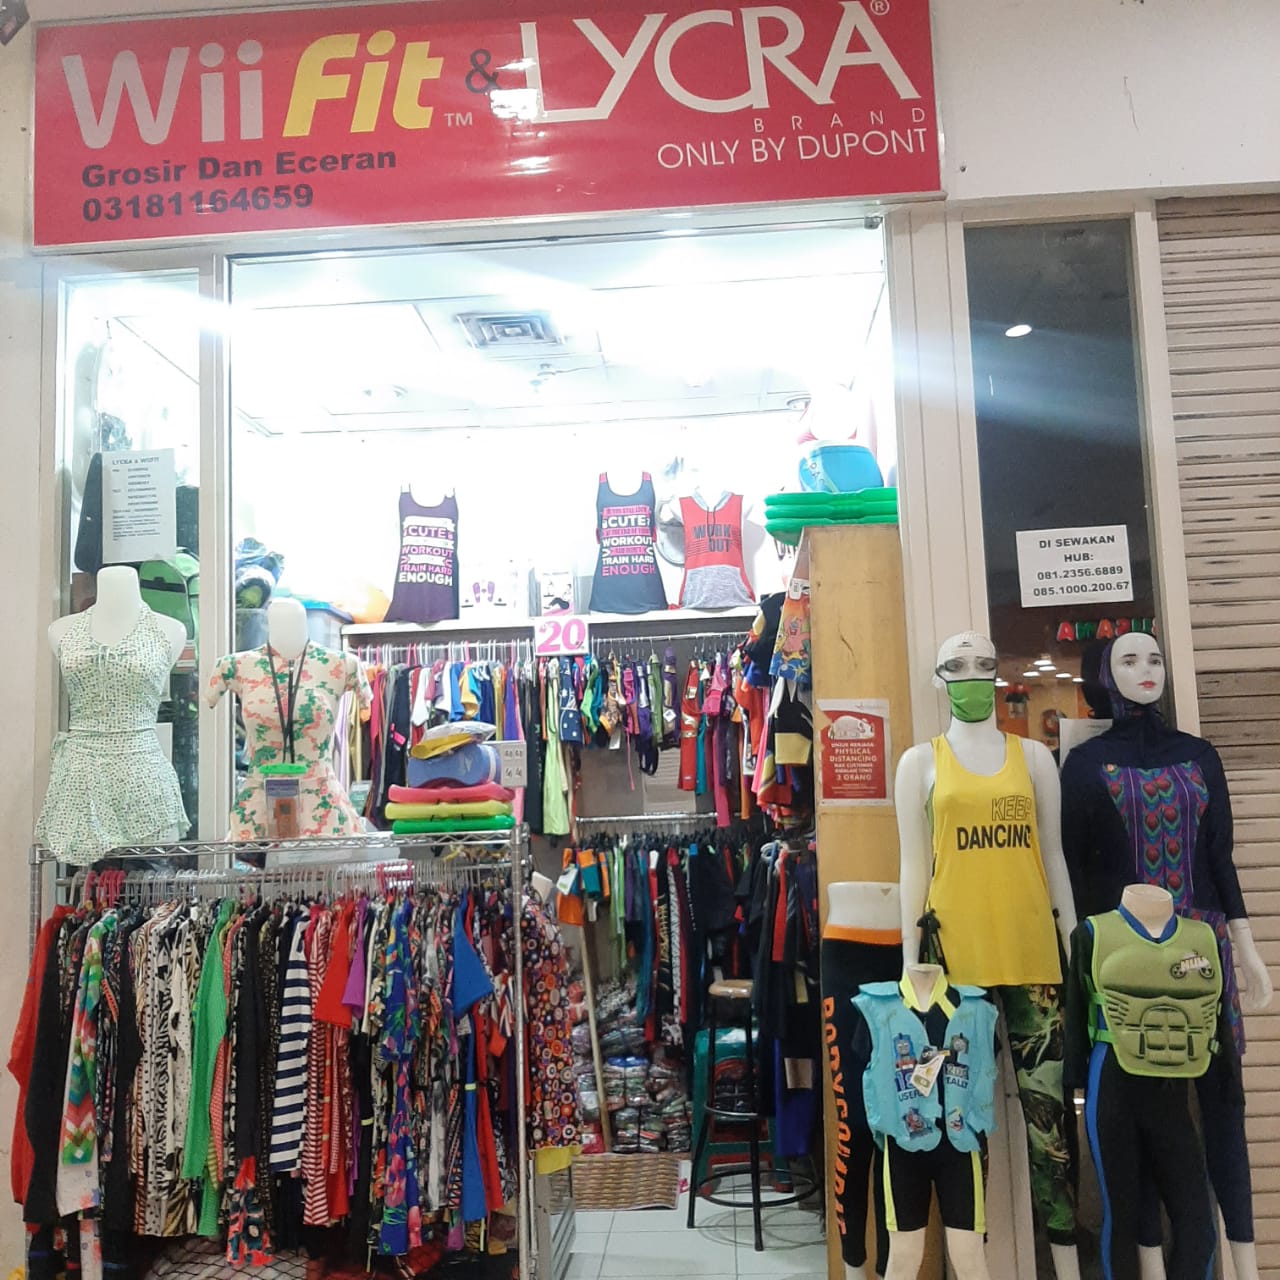 Wiifit & Lycra